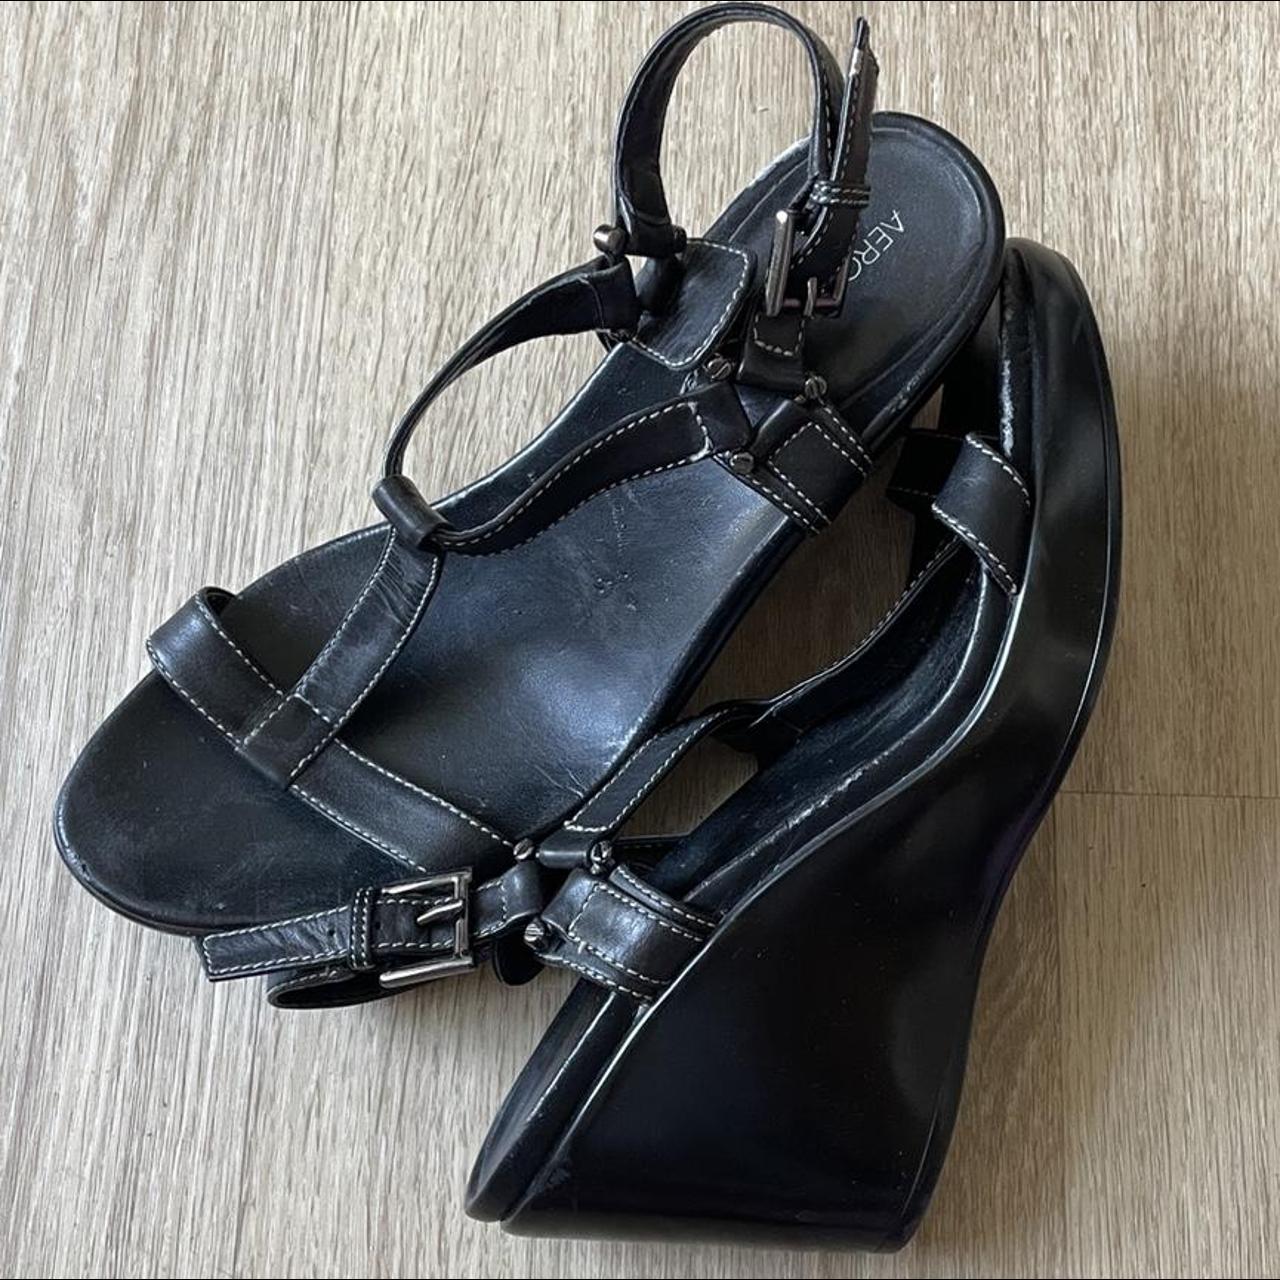 Aerosoles Women's Black and White Sandals